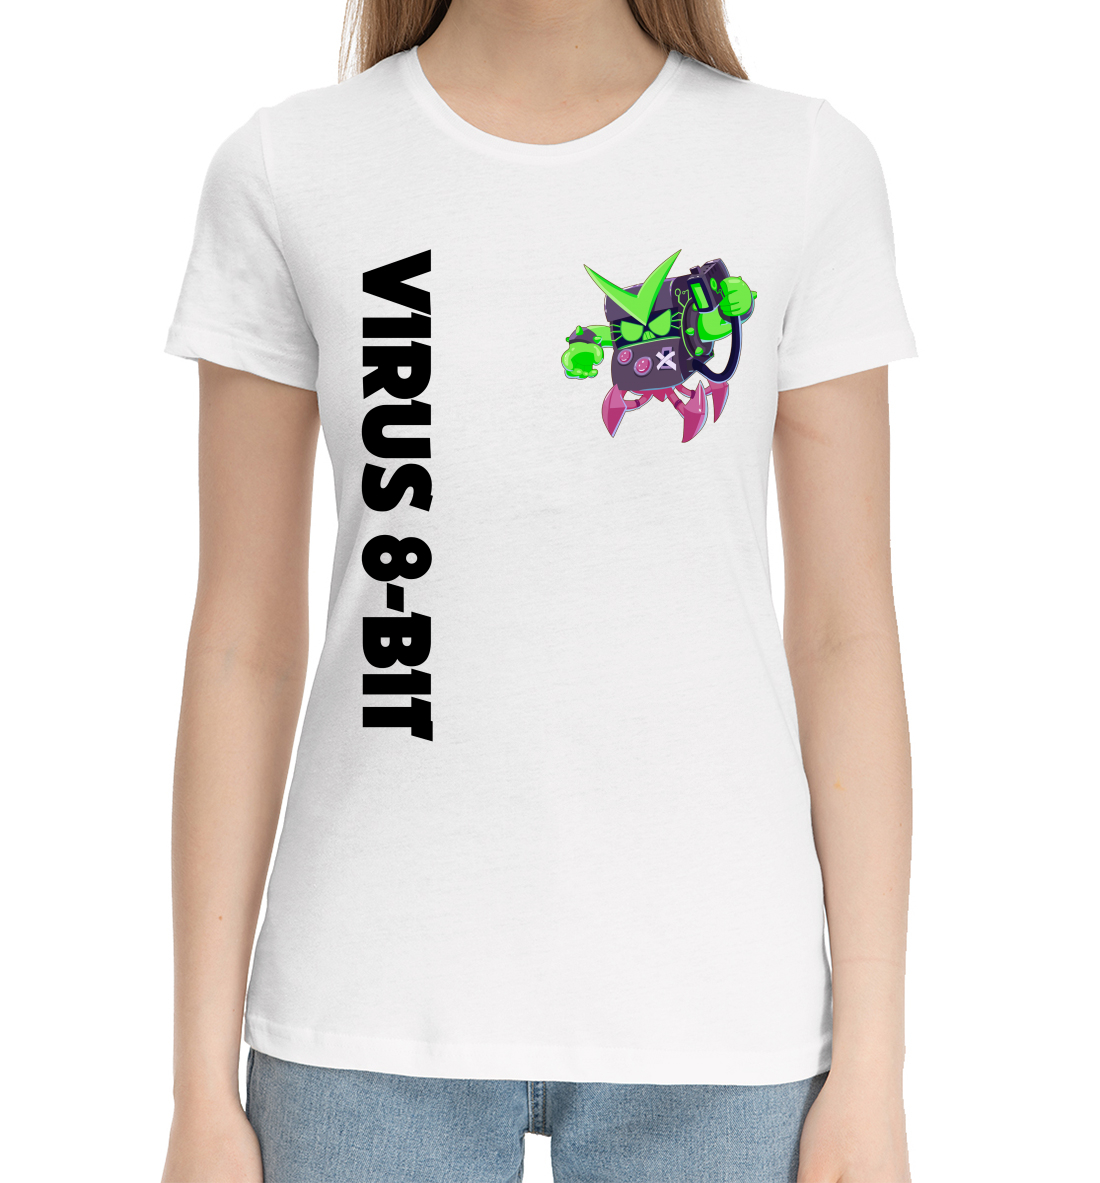 Женская Хлопковая футболка с принтом BRAWL STARS VIRUS 8 BIT., артикул CLH-861174-hfu-1mp